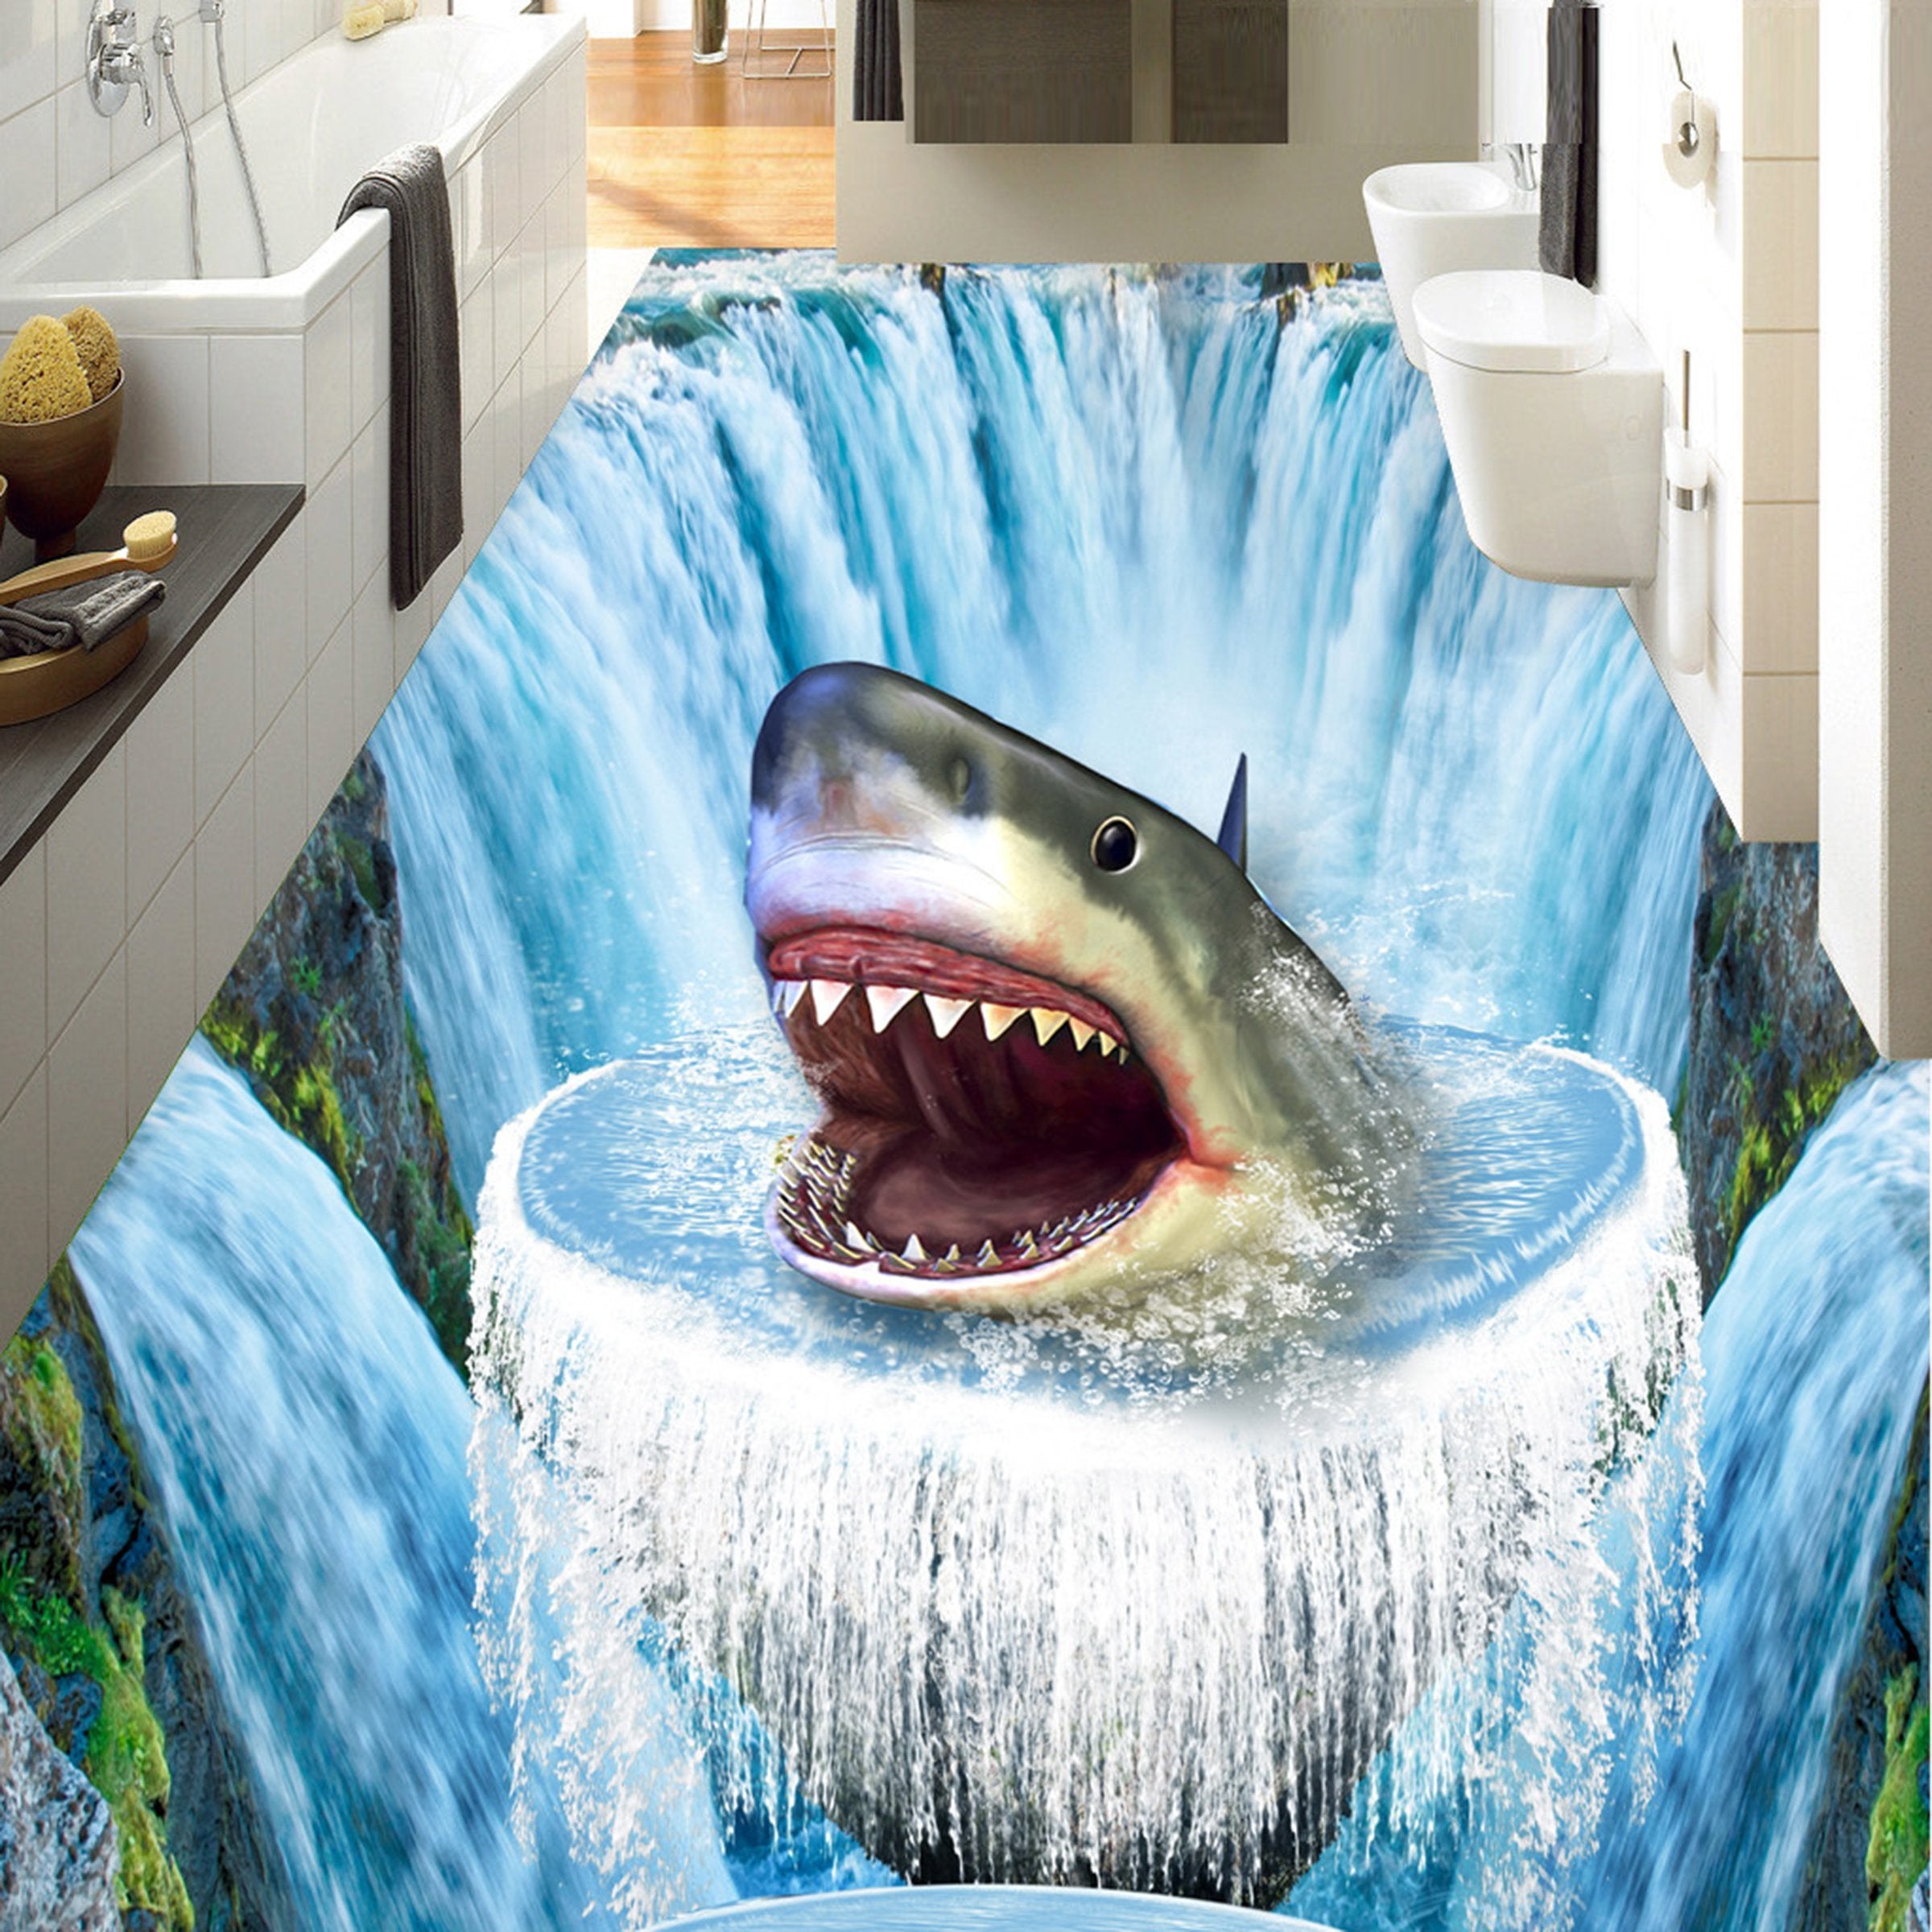 3D Shark Mouth WG620 Floor Mural Wallpaper AJ Wallpaper 2 